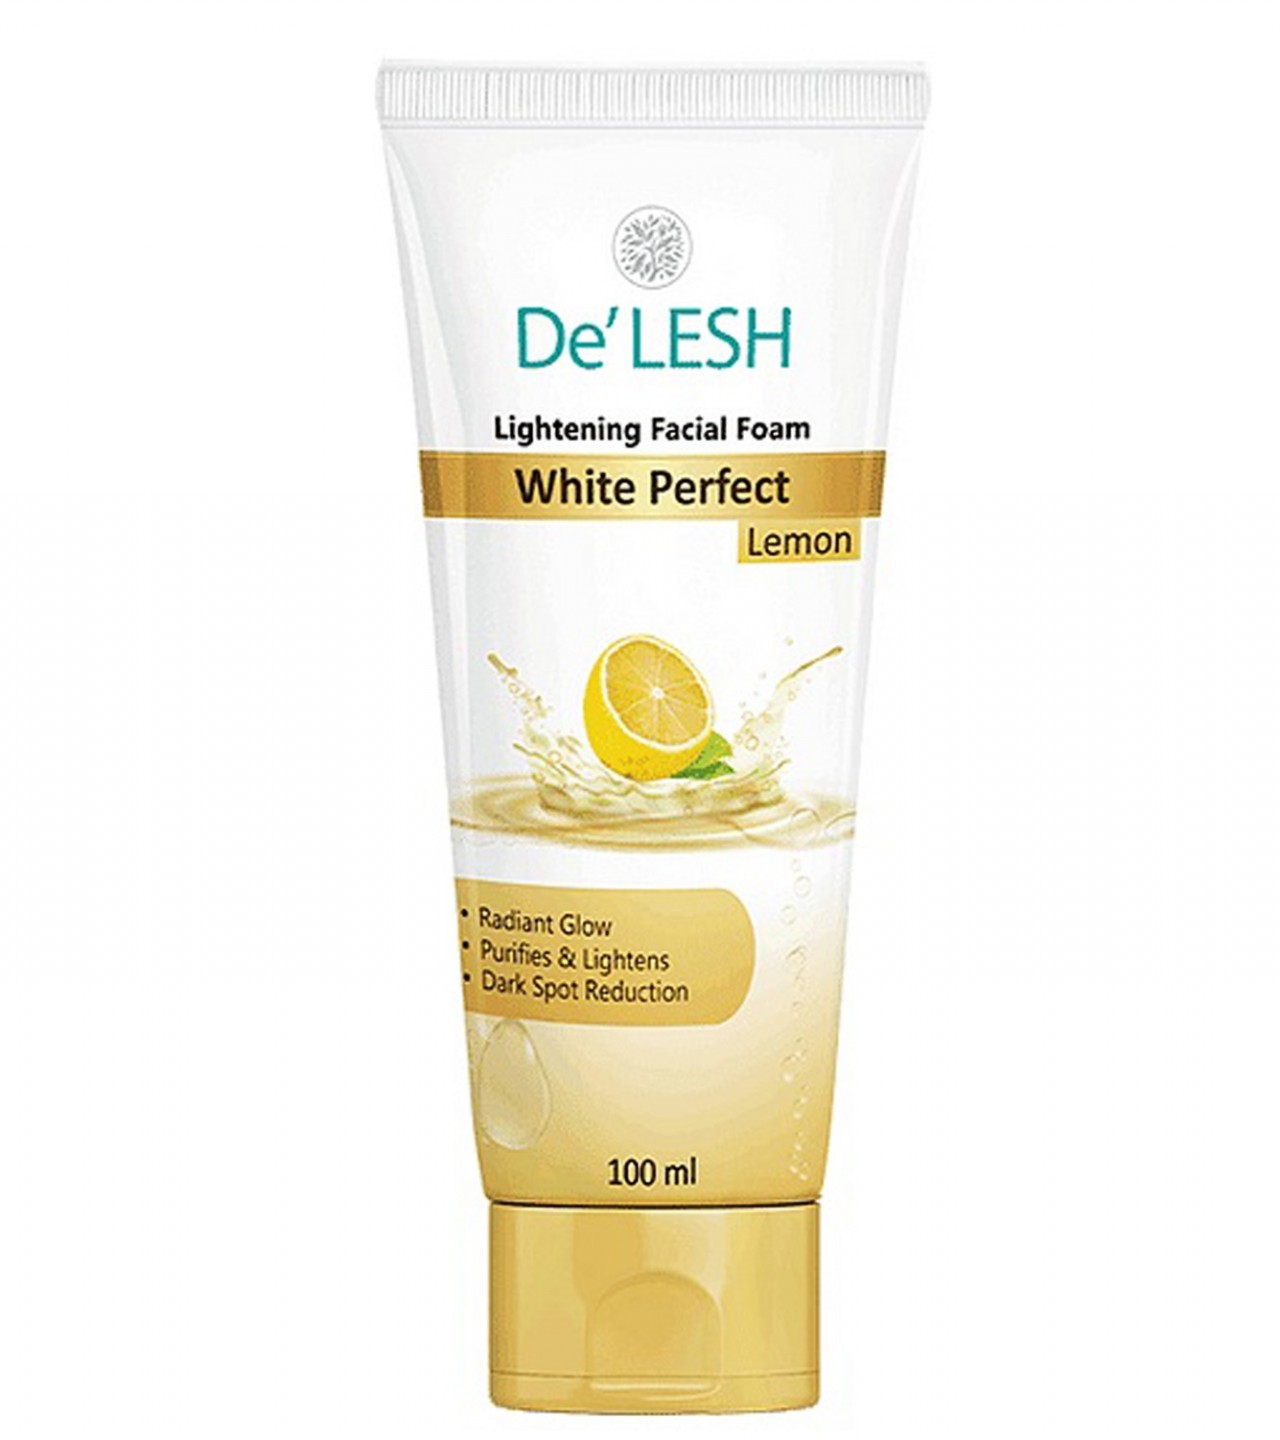 De’Lesh Lemon Lightening Facial Foam Face Wash - 100 ml